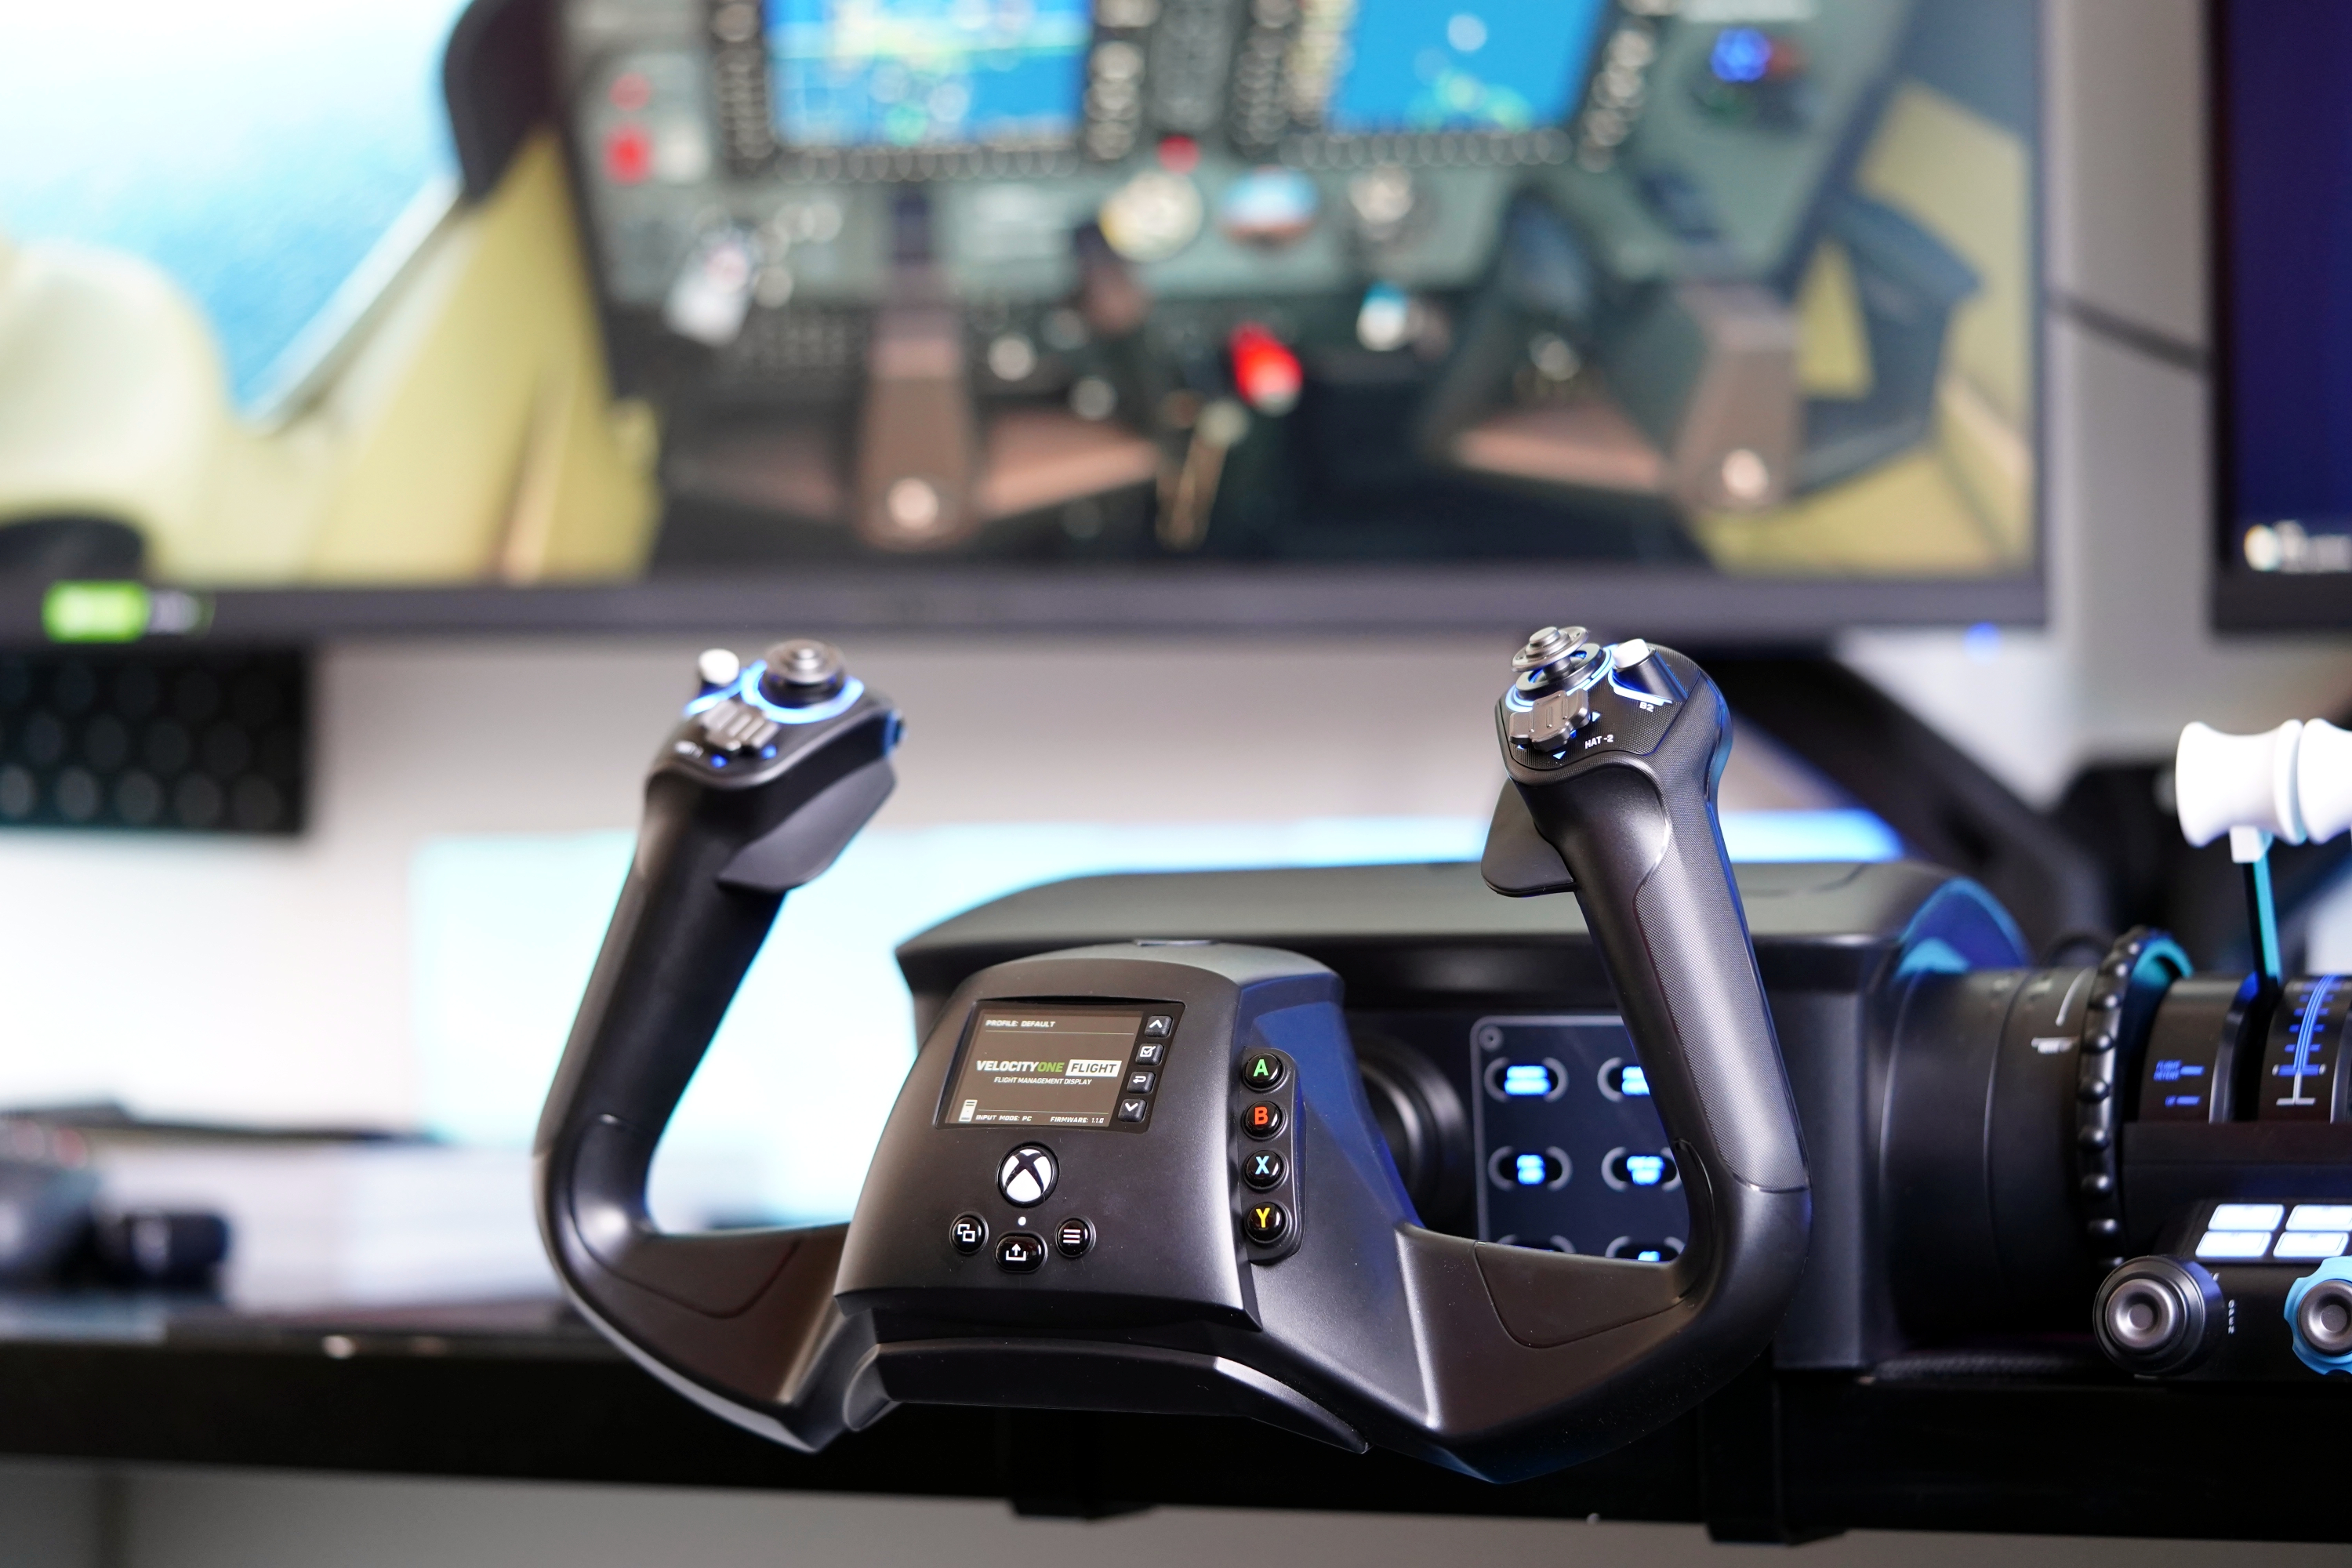 VelocityOne Flight Universal Control System